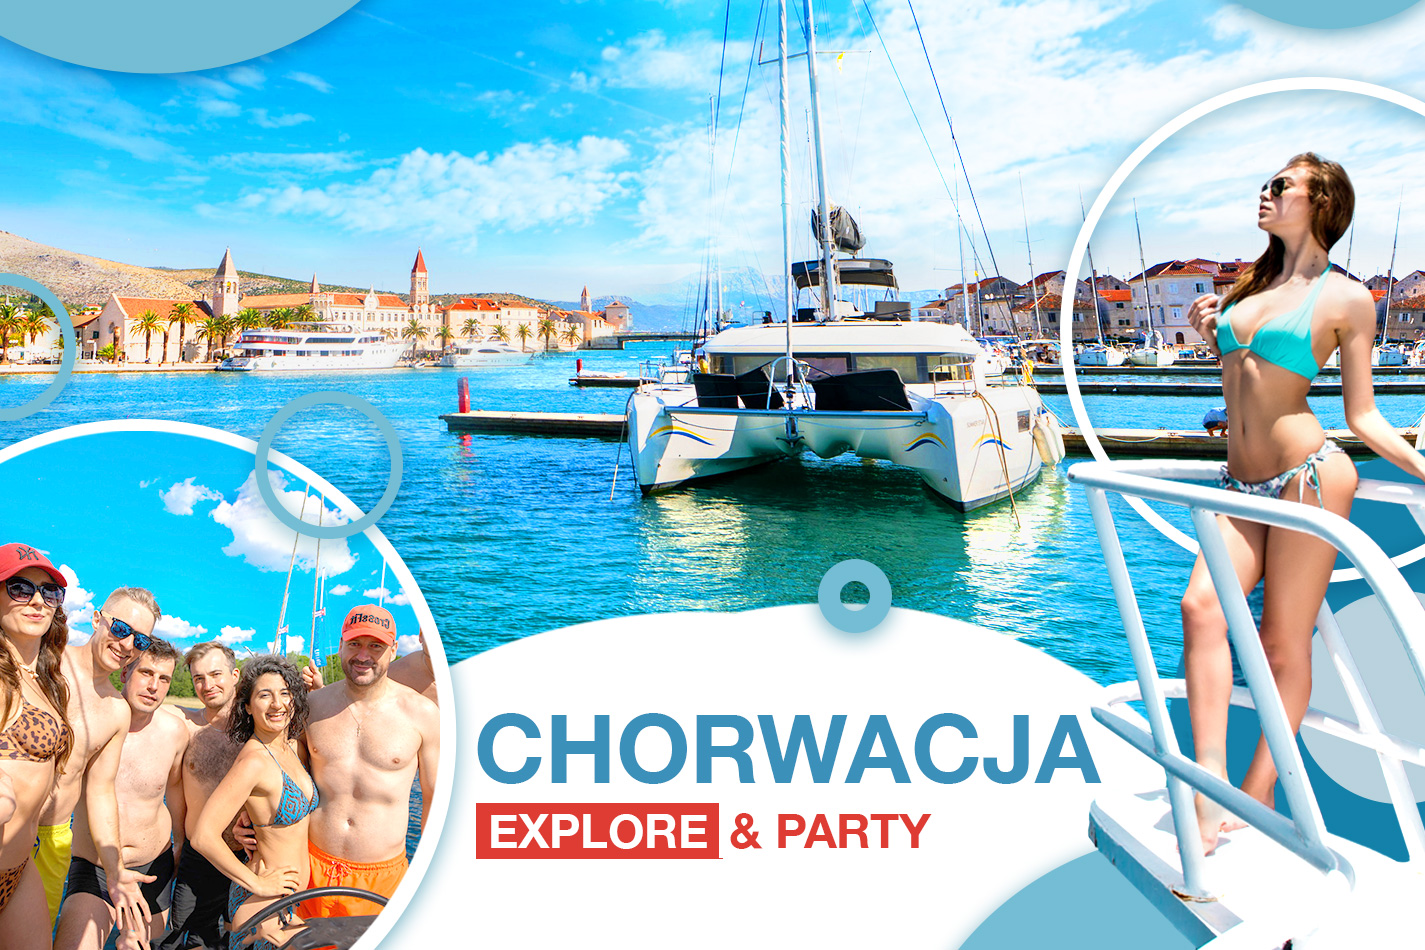 FB_Chorwacja-Explore-&-Party_post_FB_IG_1425x950-1